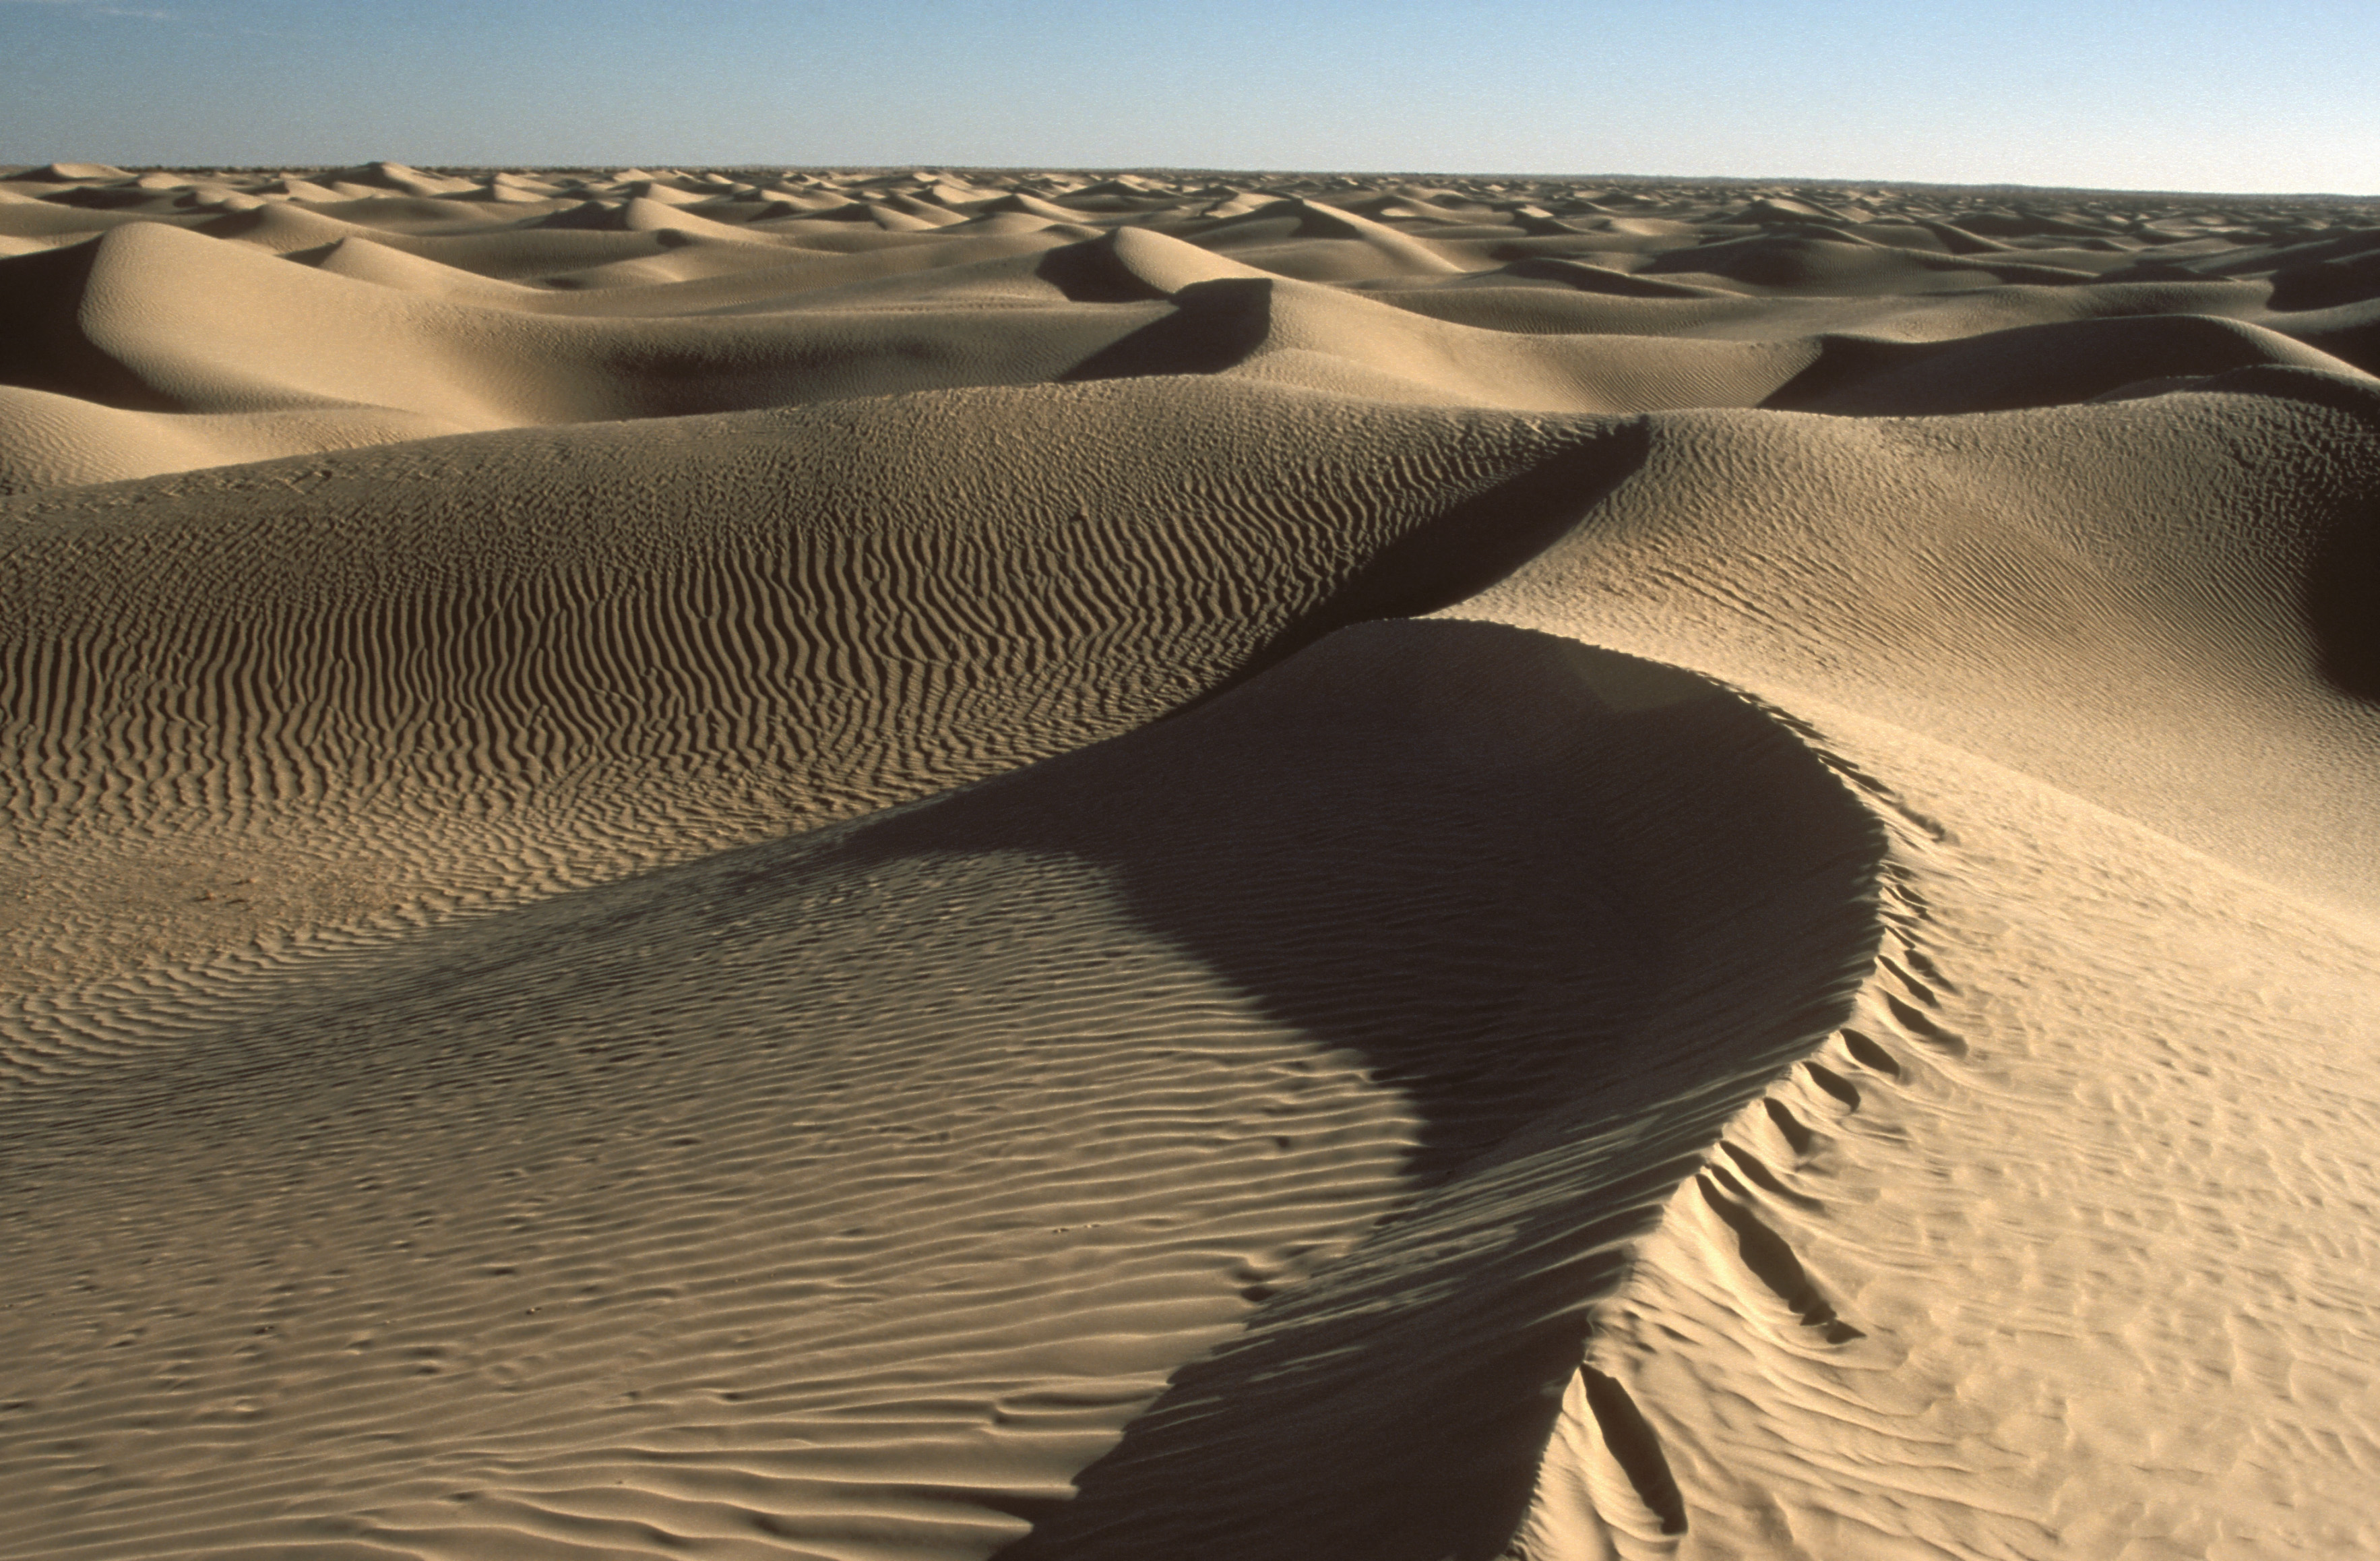 Sand desert: Eastern Great Erg, Tunisia photo by Zoltán Karancsi